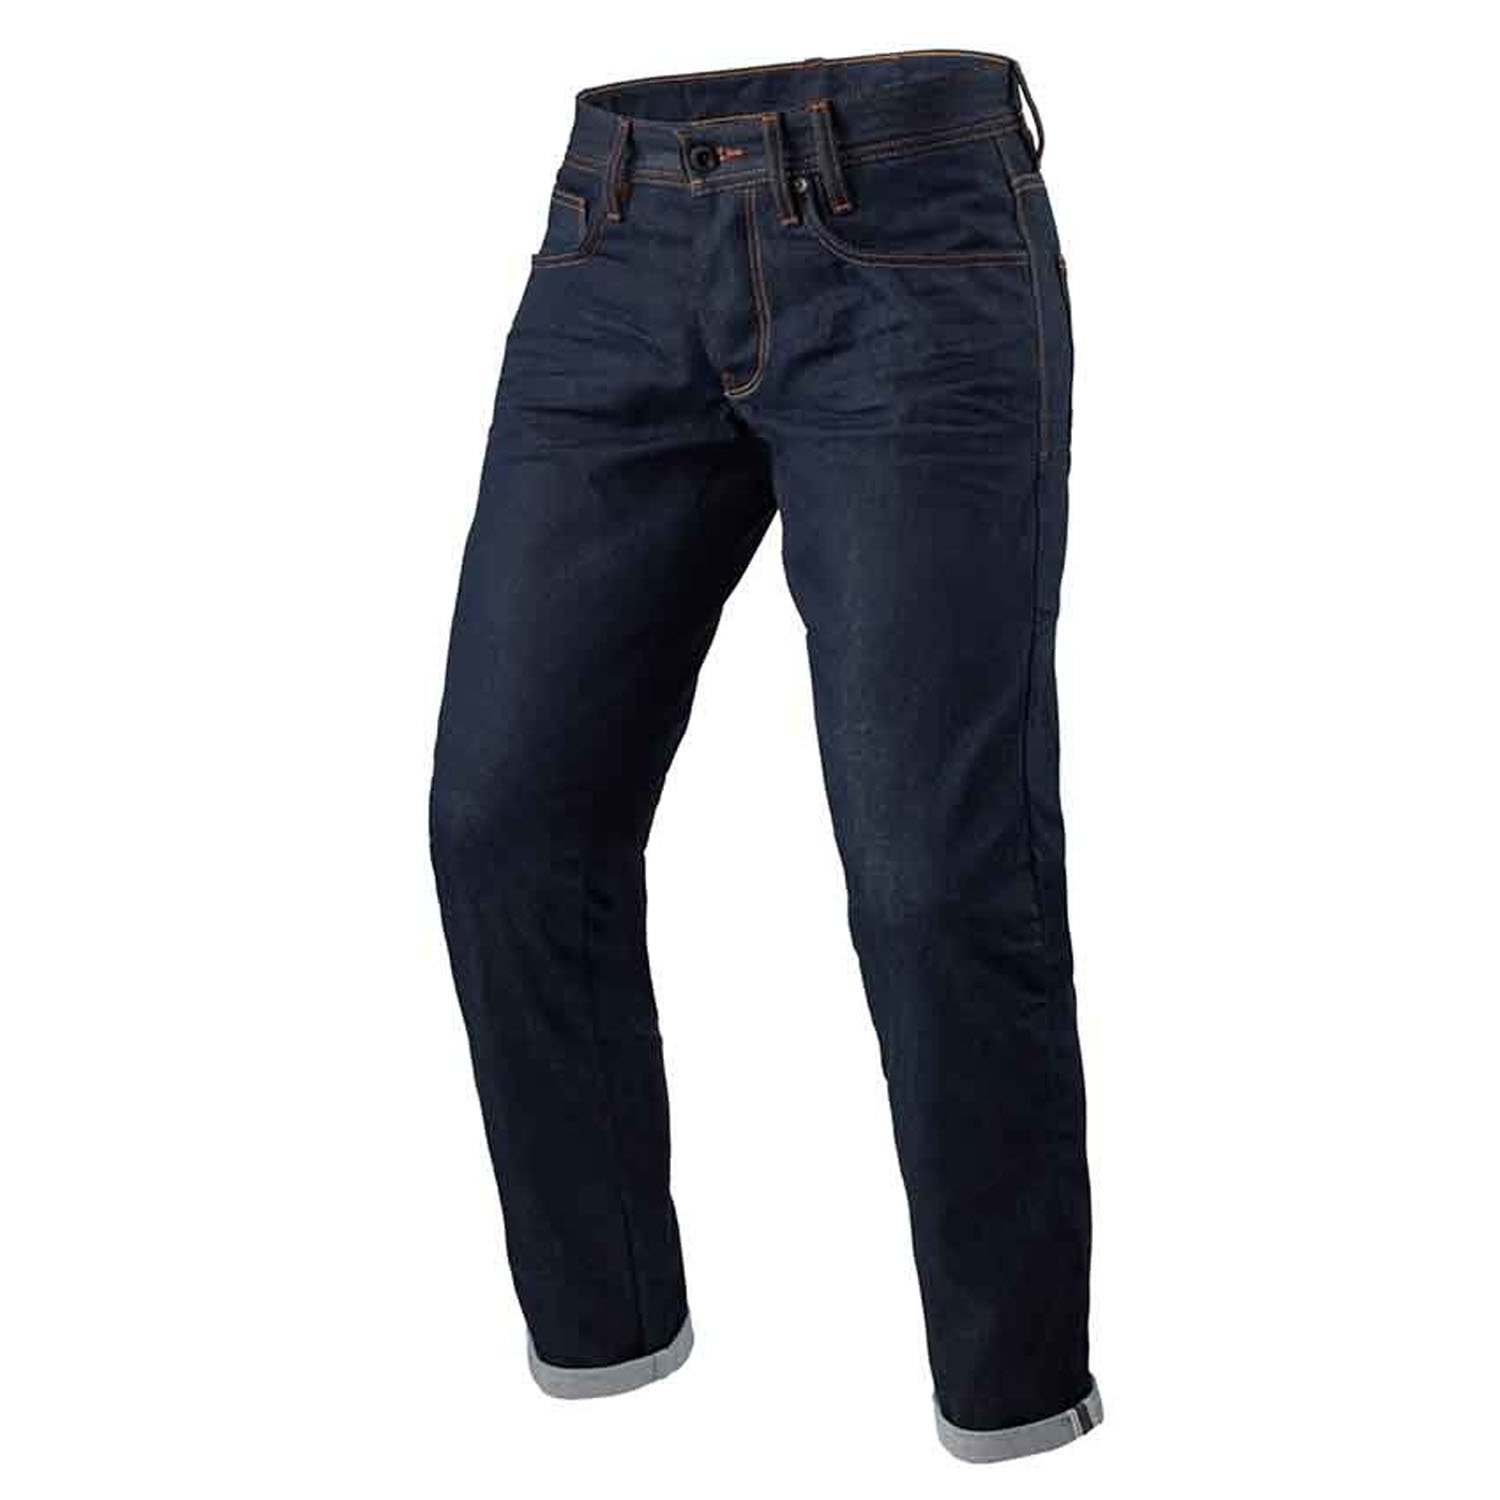 Image of REV'IT! Jeans Lewis Selvedge TF Dark Blue L36 Motorcycle Pants Talla L36/W31